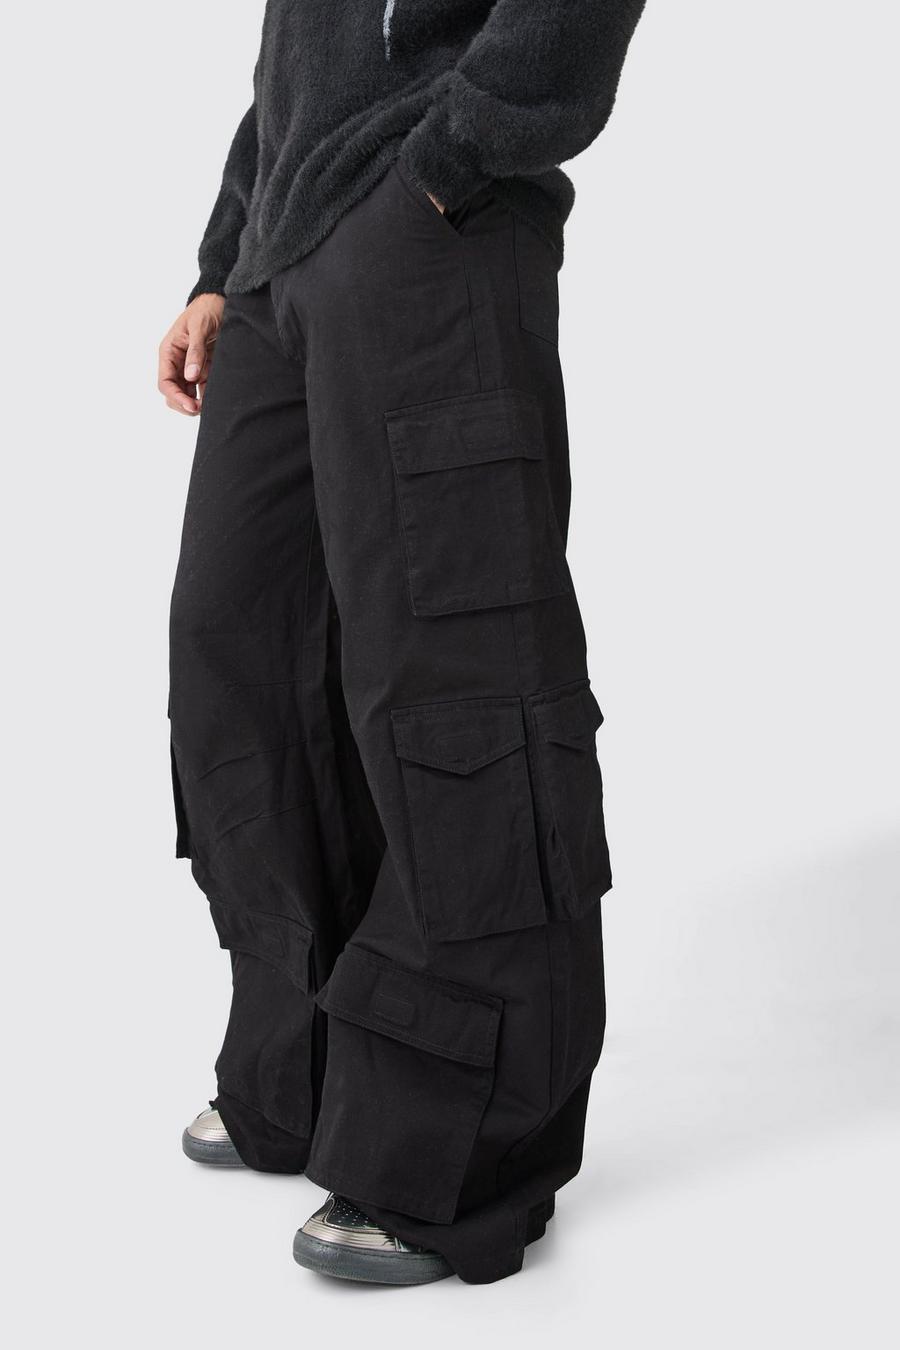 Black Extreme Baggy Rigid Multi Cargo Pocket Pants